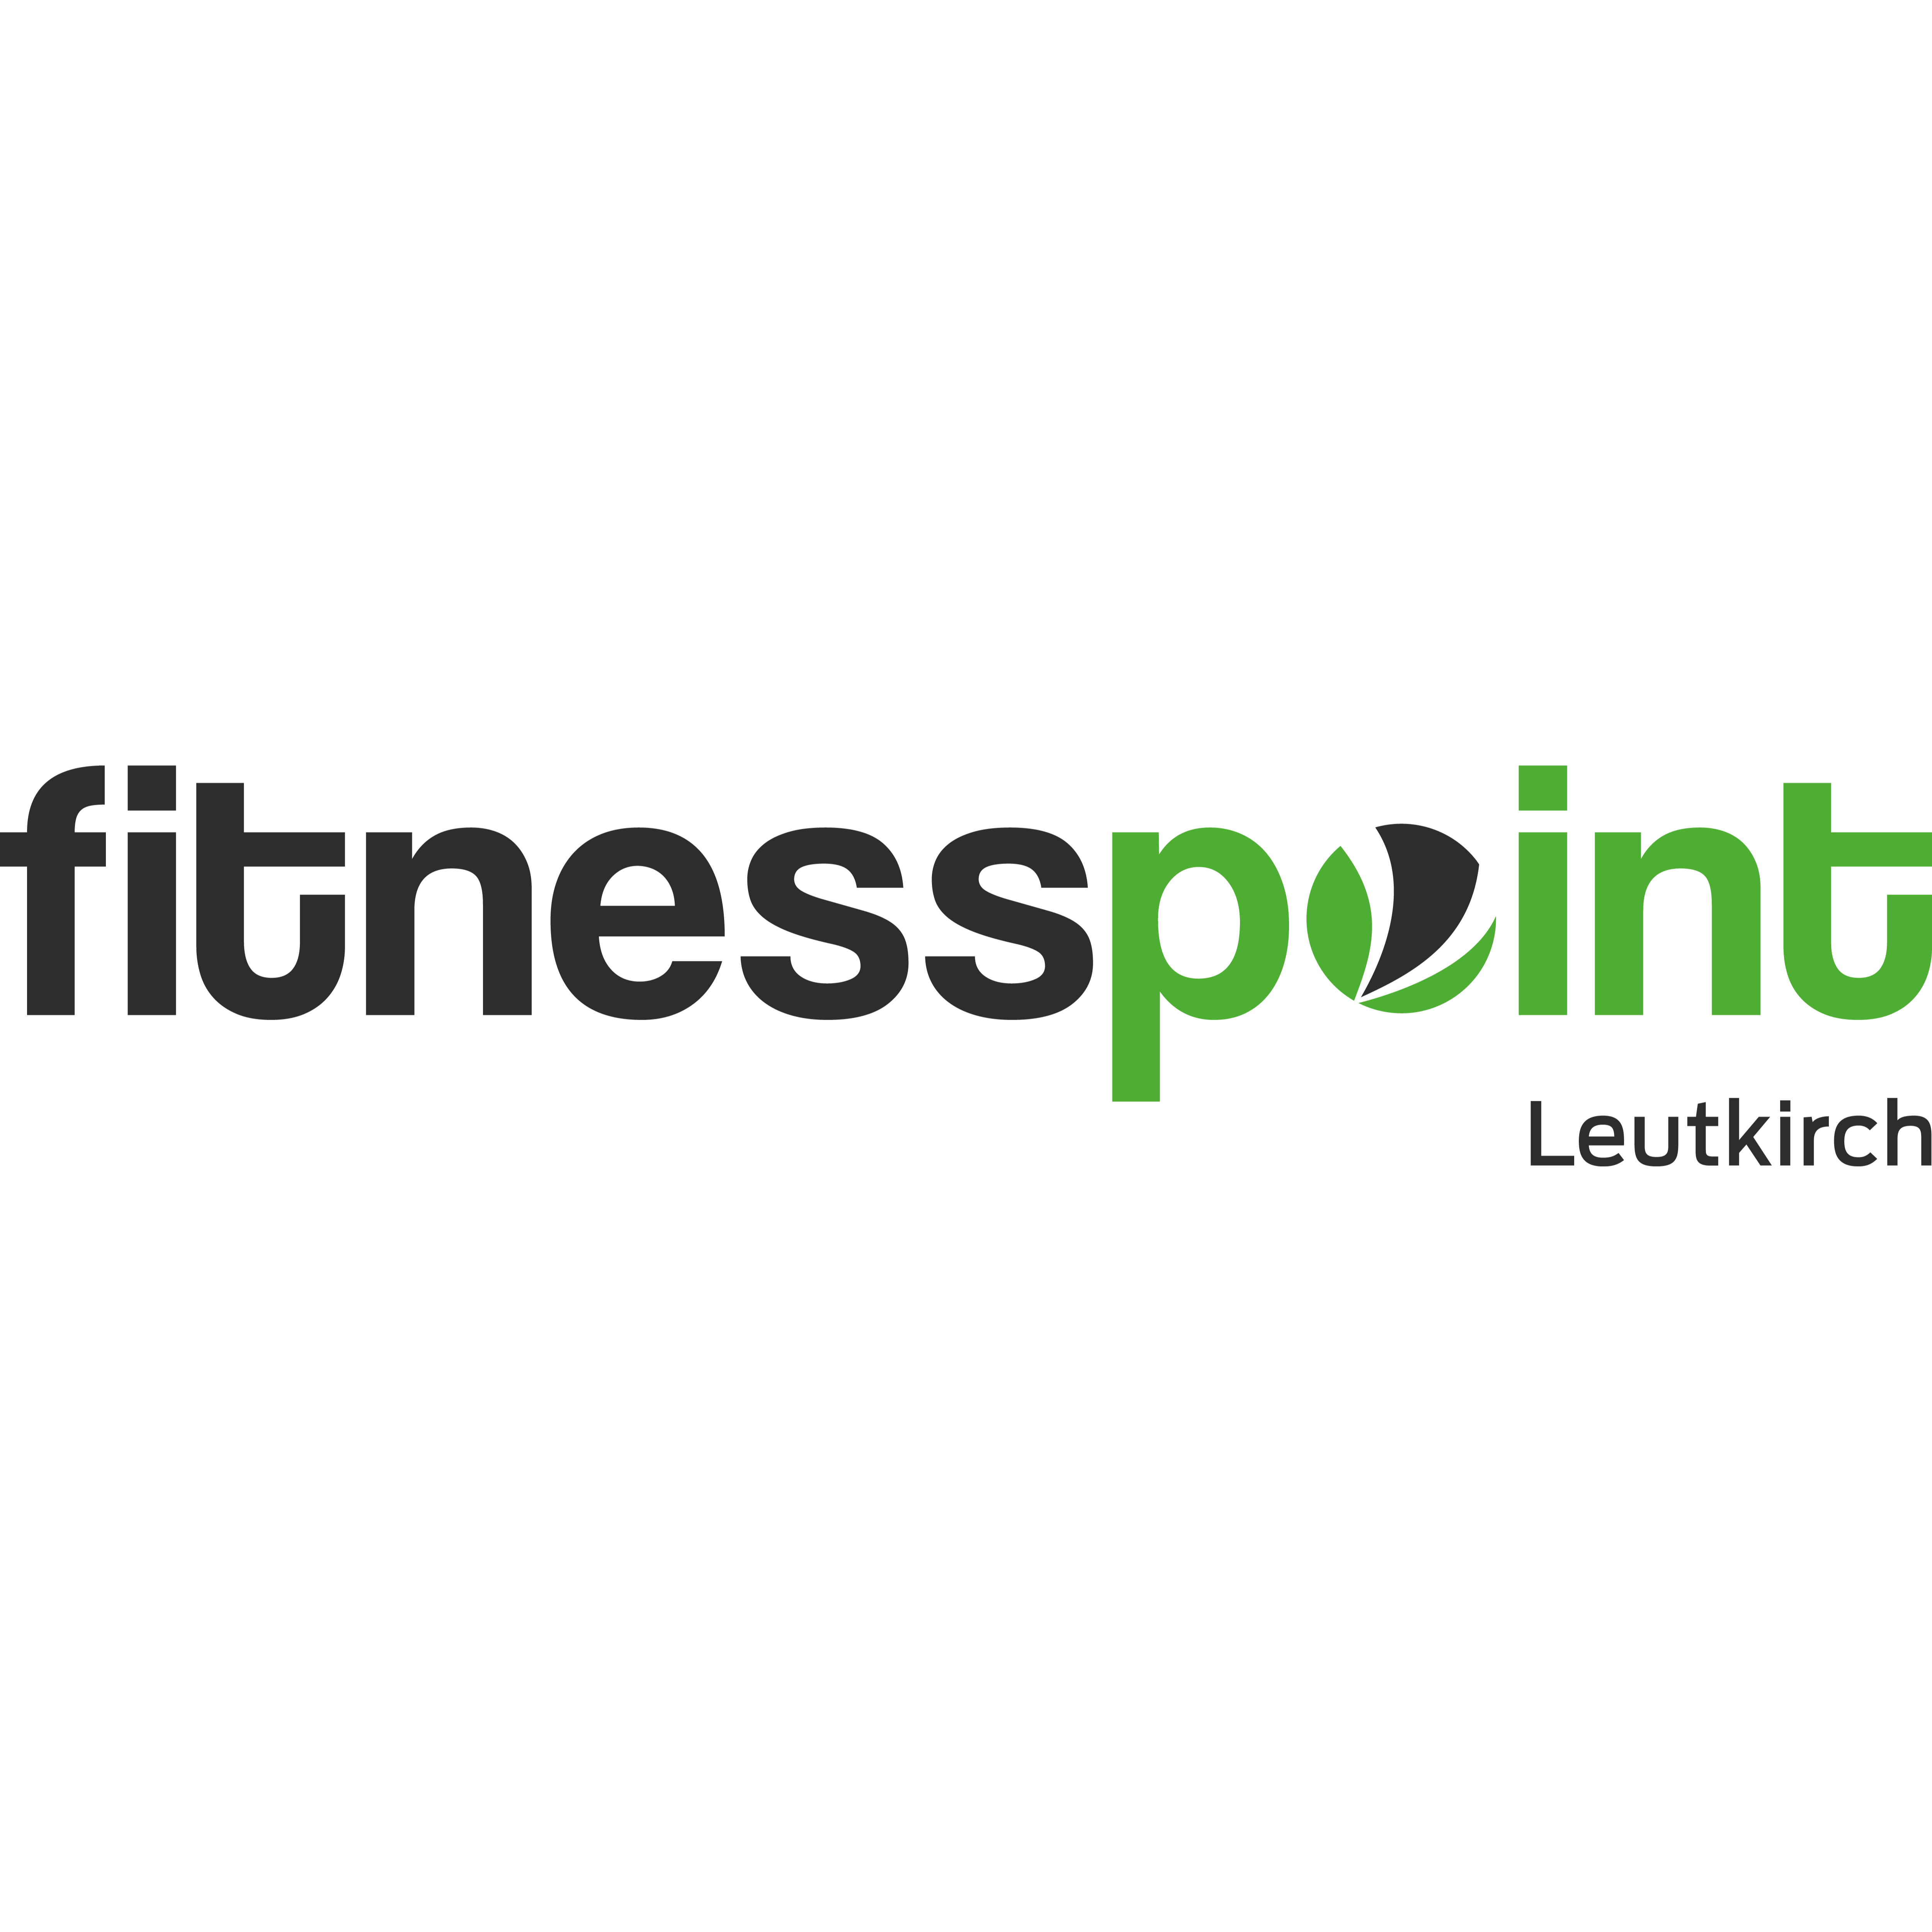 Fitnesspoint Leutkirch  